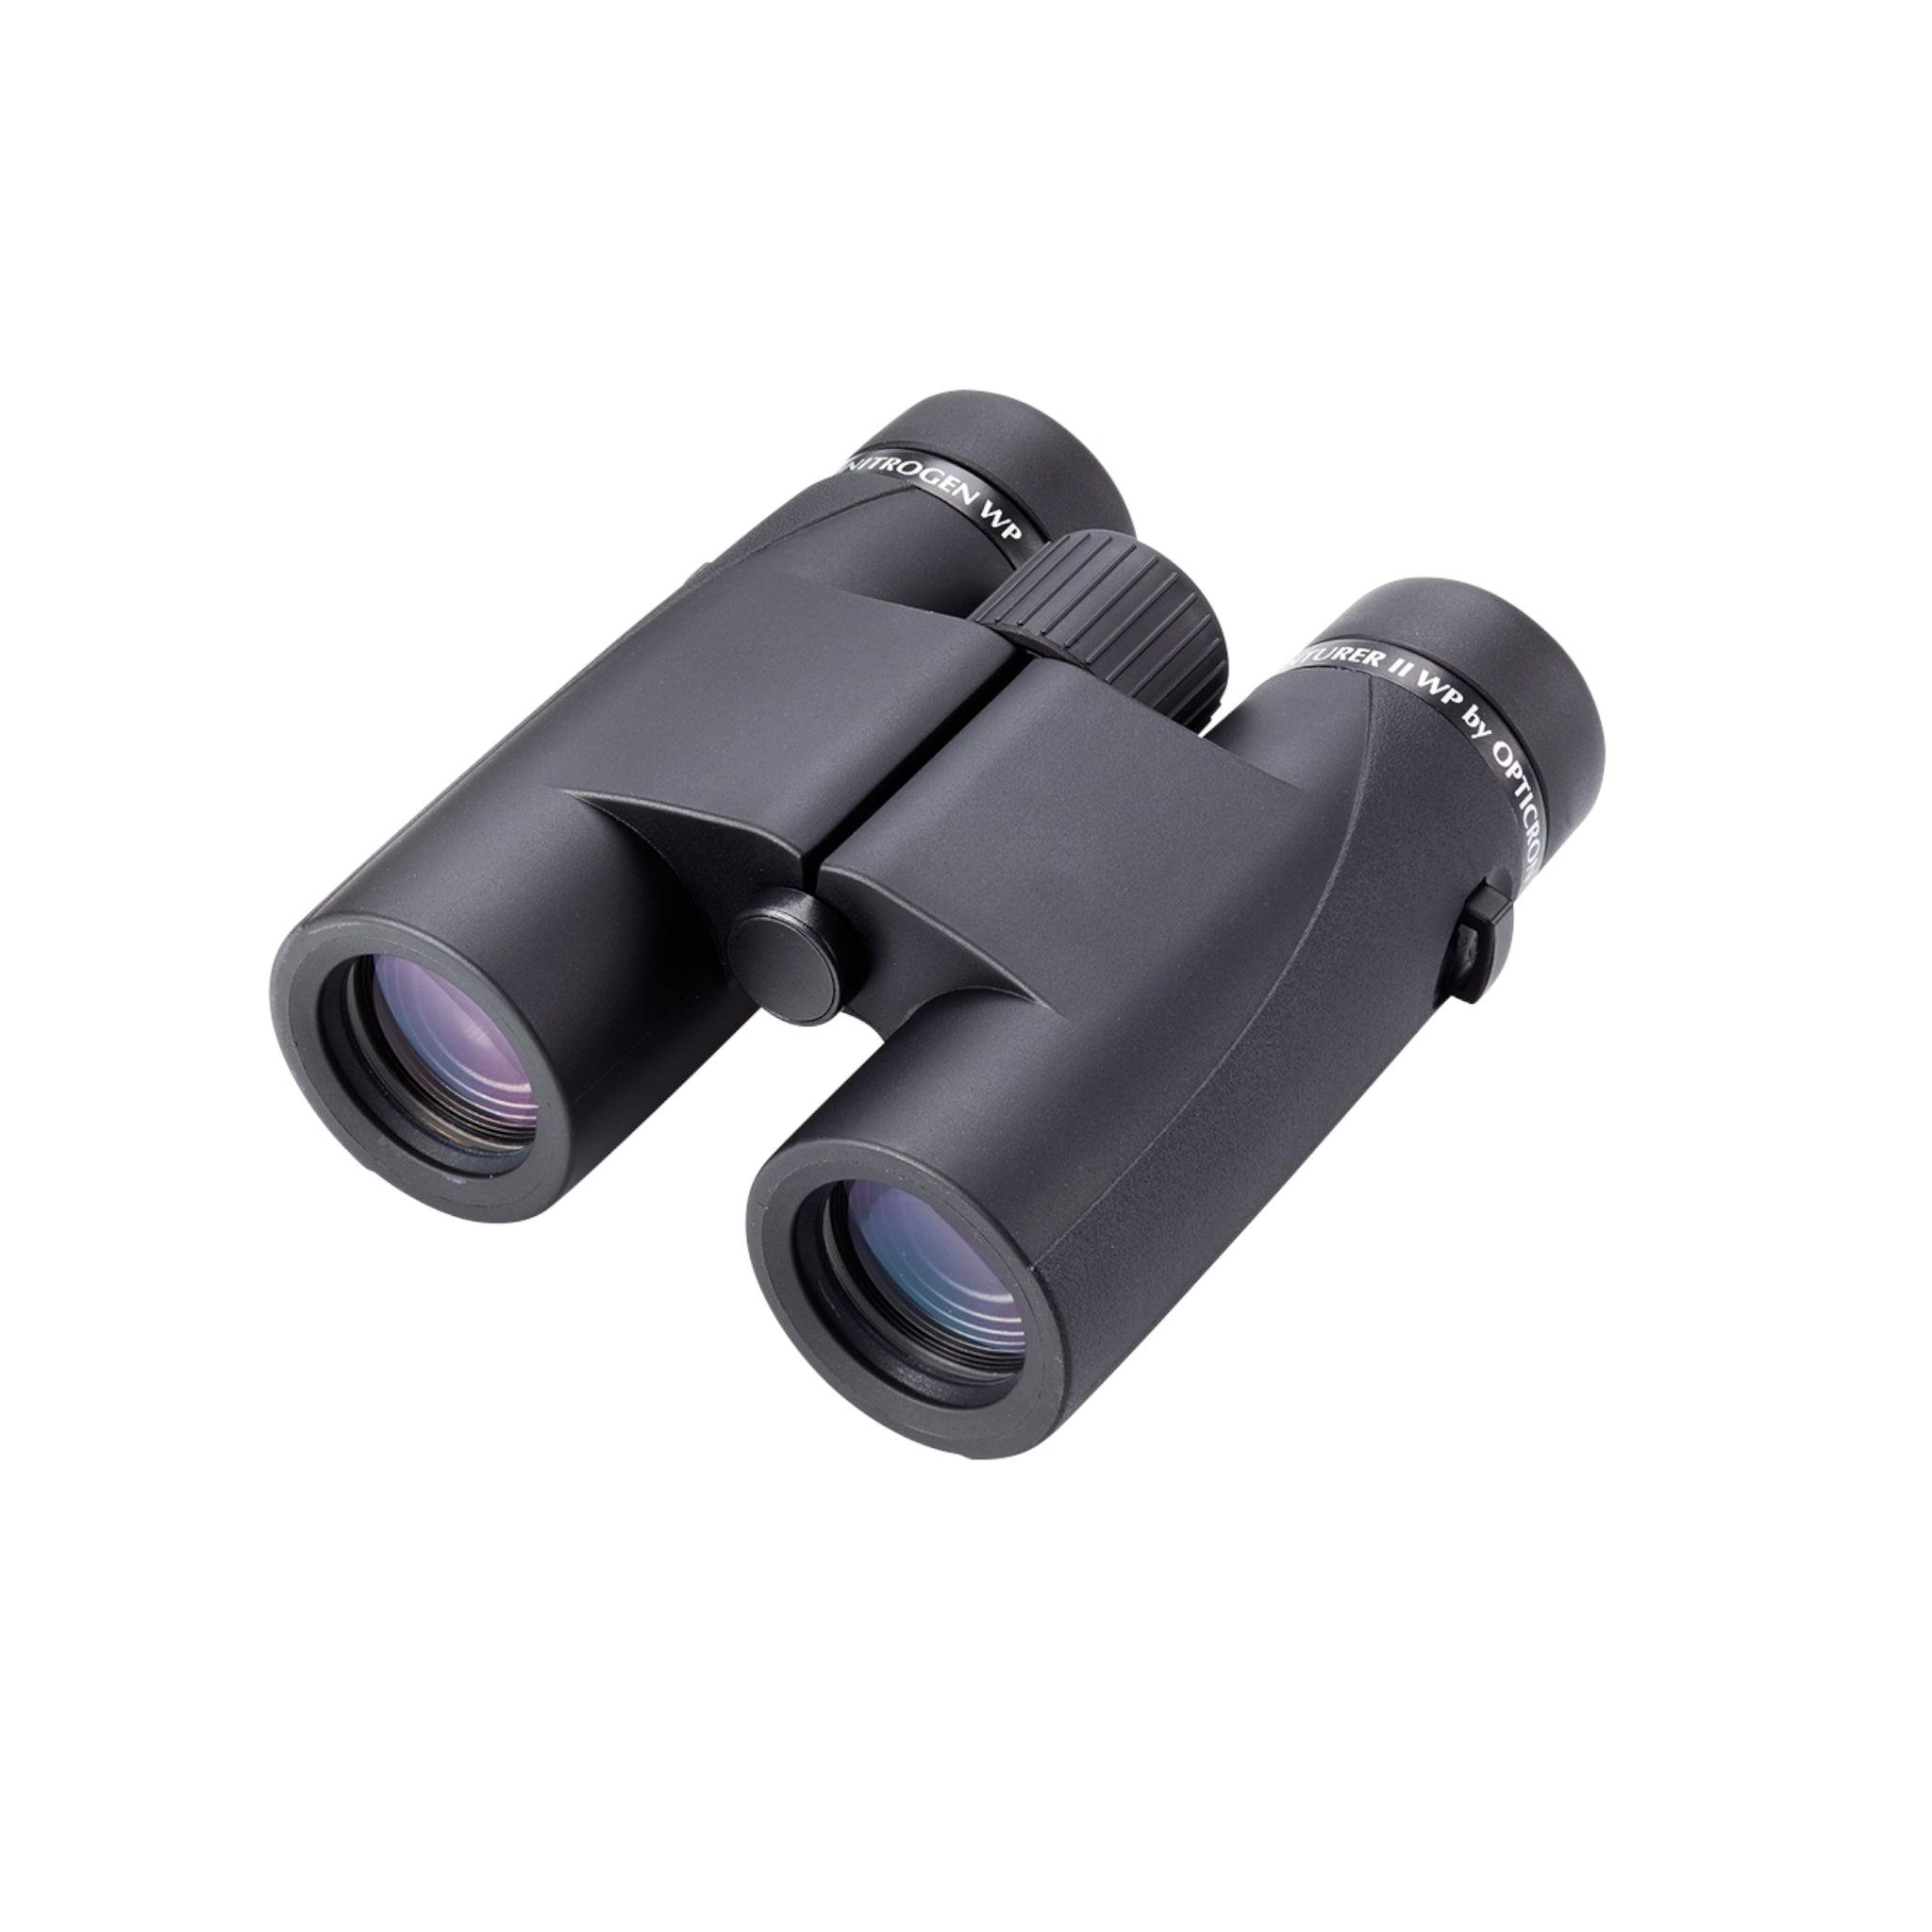 Opticron Adventurer ii 8x32 WP Binoculars (Black)